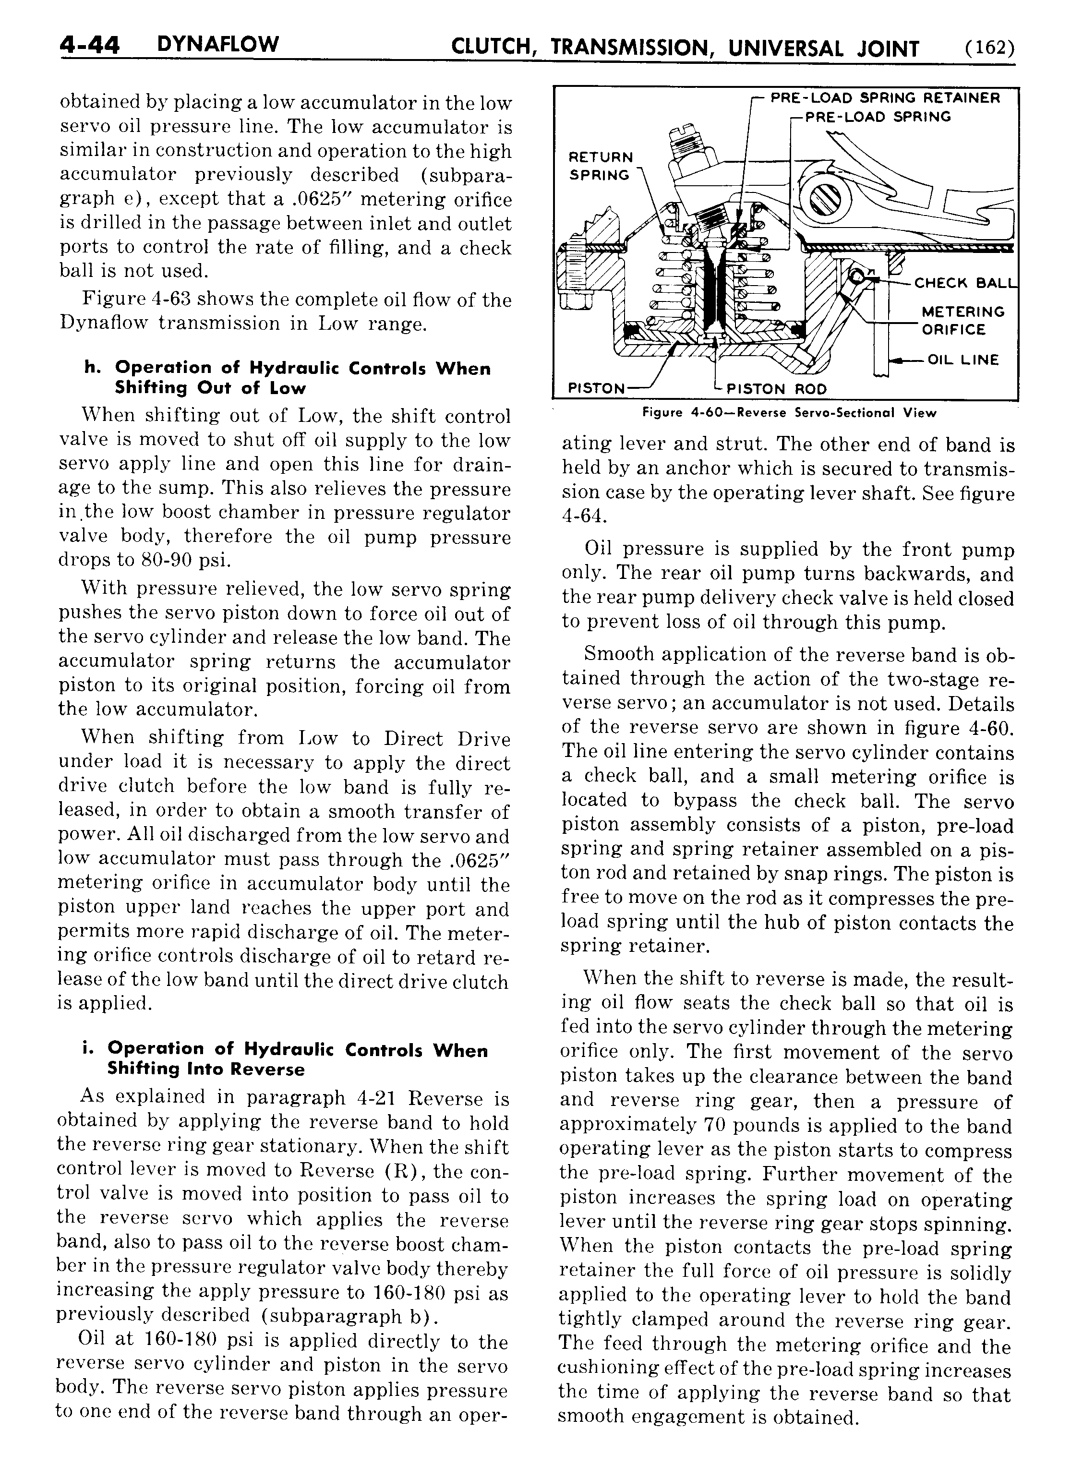 n_05 1951 Buick Shop Manual - Transmission-044-044.jpg